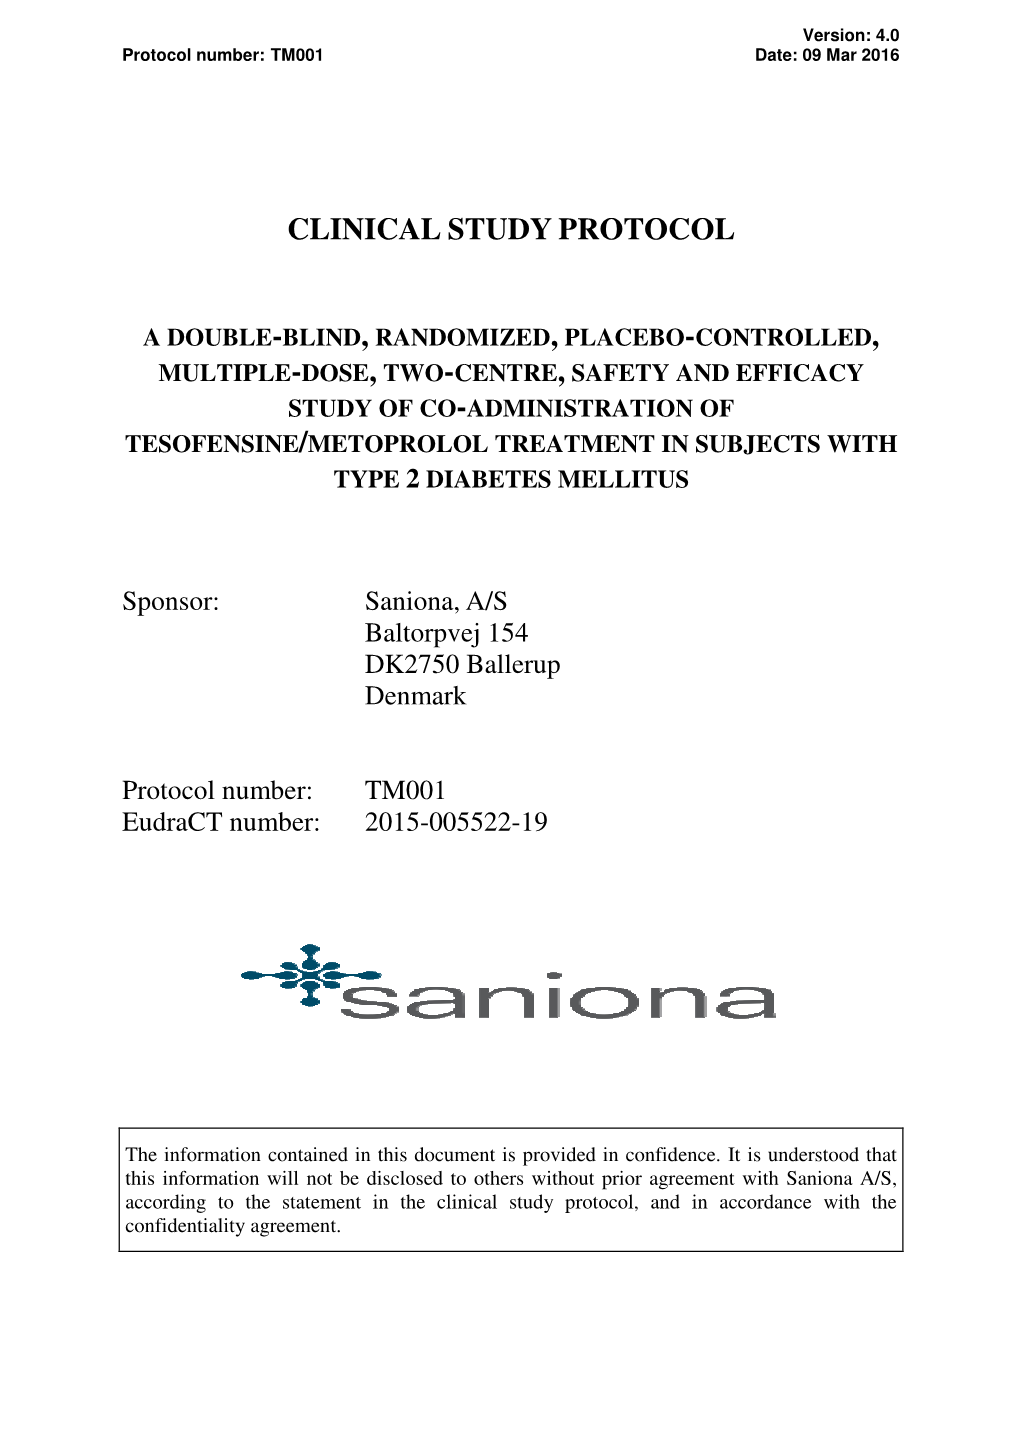 Clinical Study Protocol